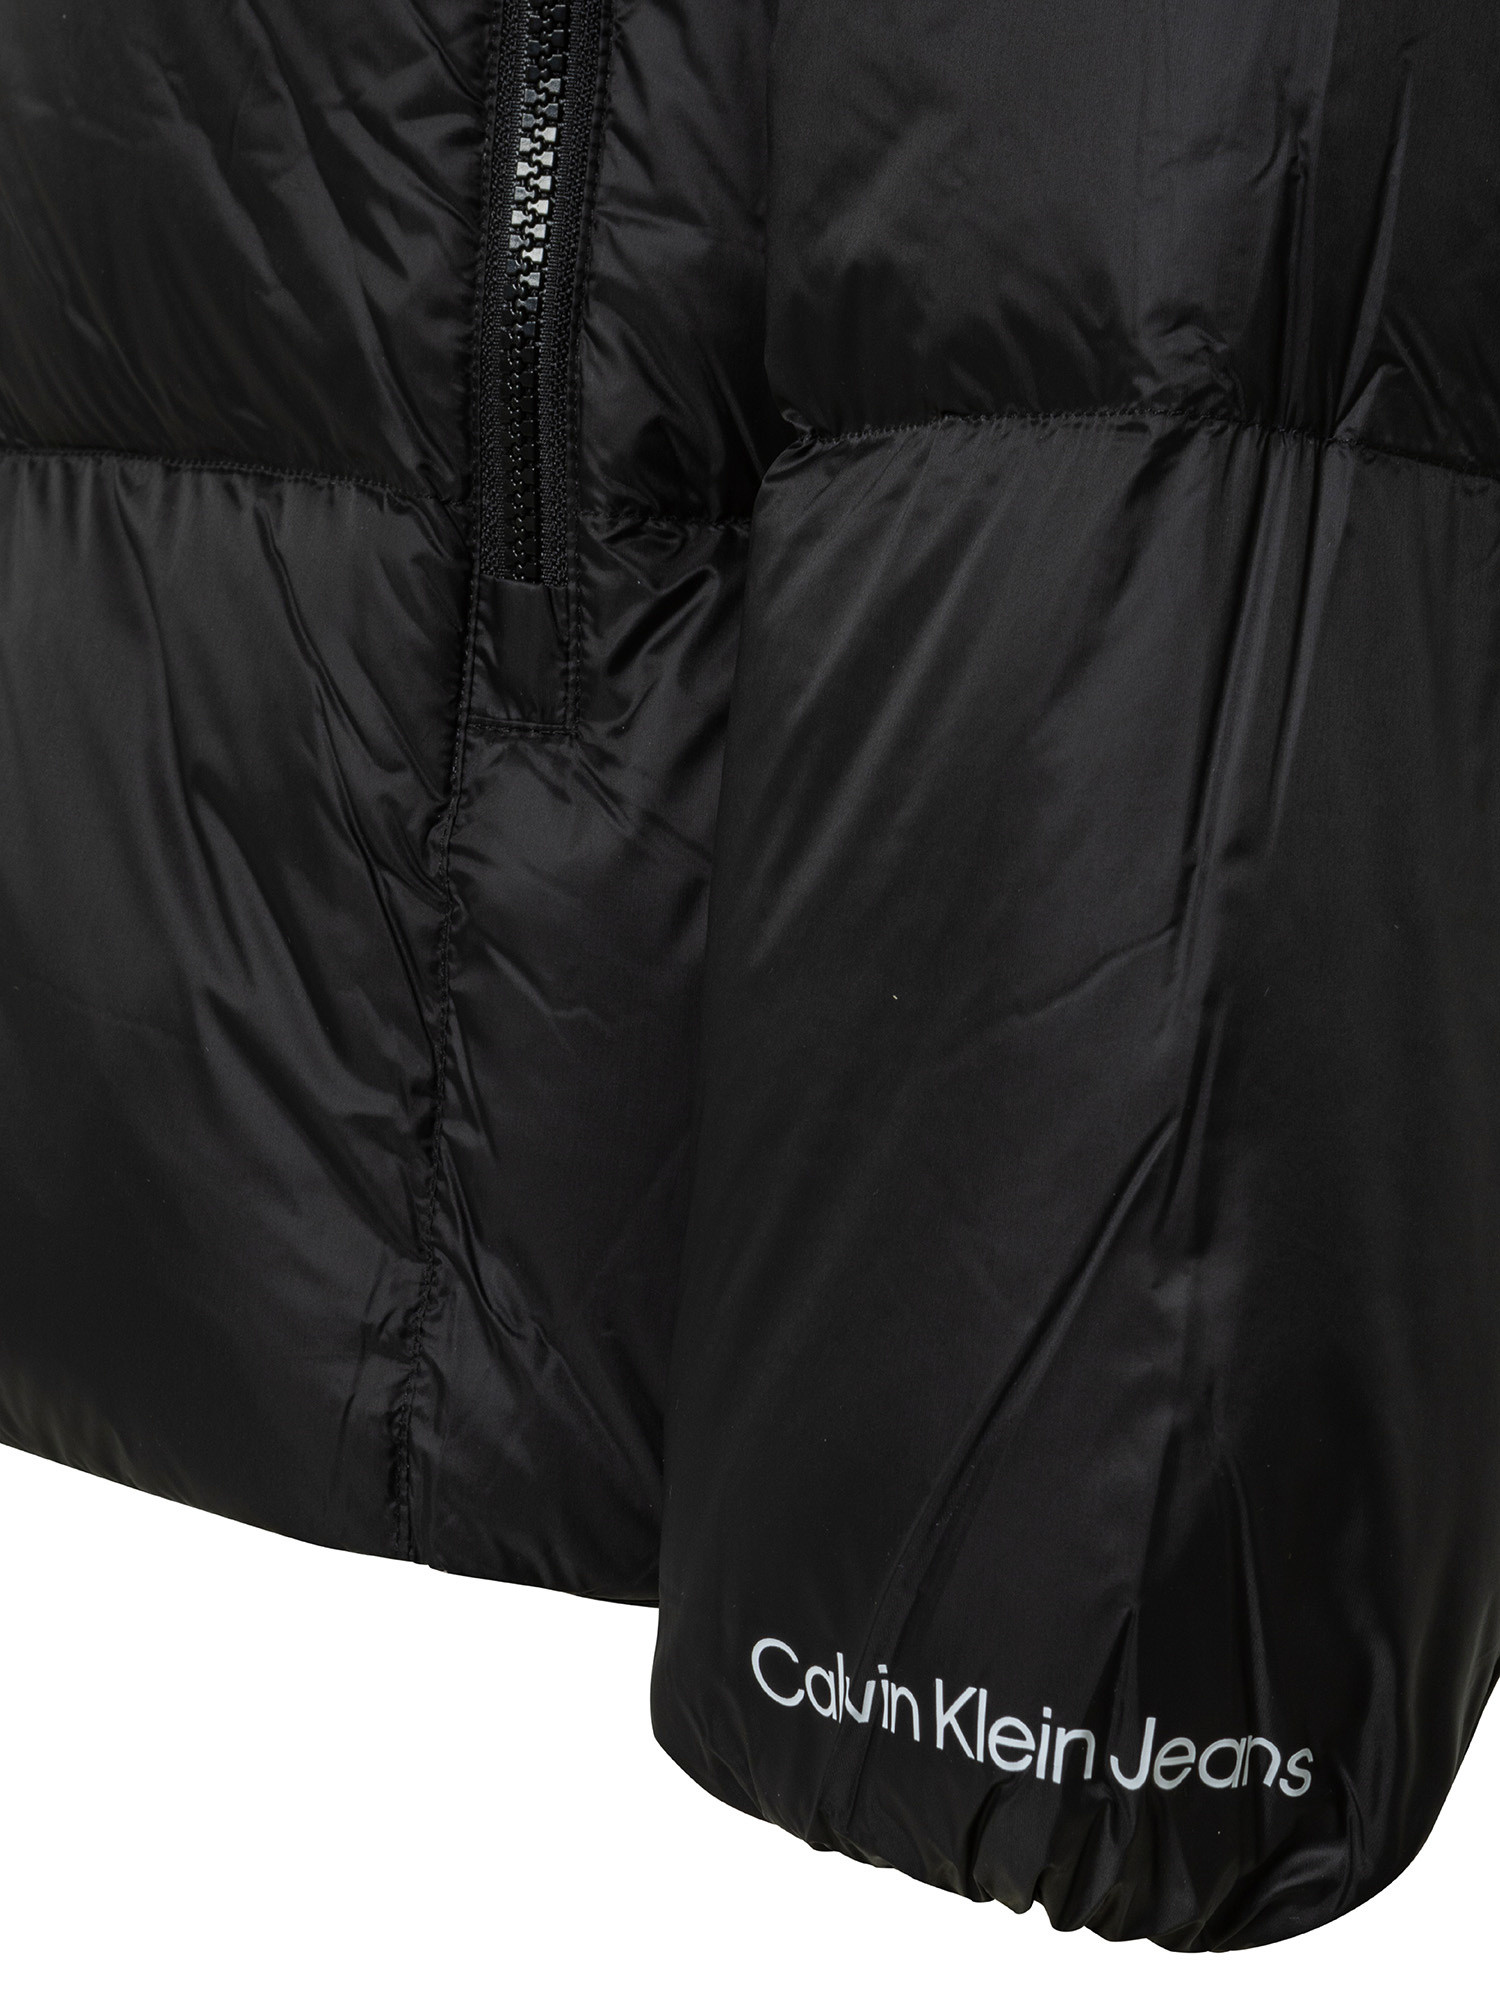 Calvin Klein Jeans - Down jacket with logo, Black, large image number 2